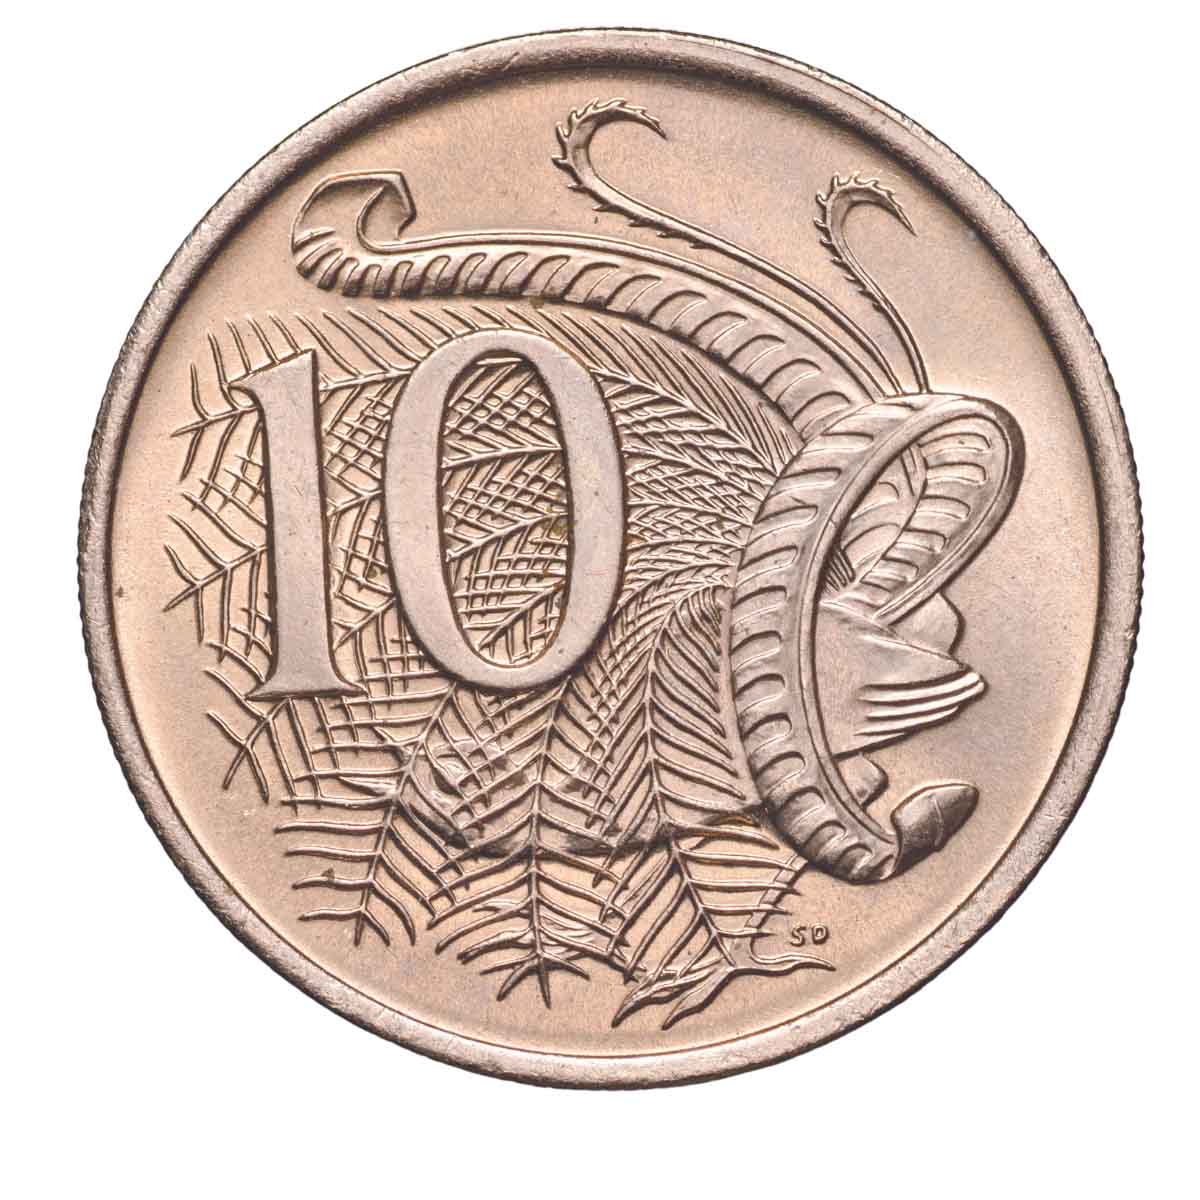 RAM 1981 10c Mint Roll (40 Uncirculated Coins)